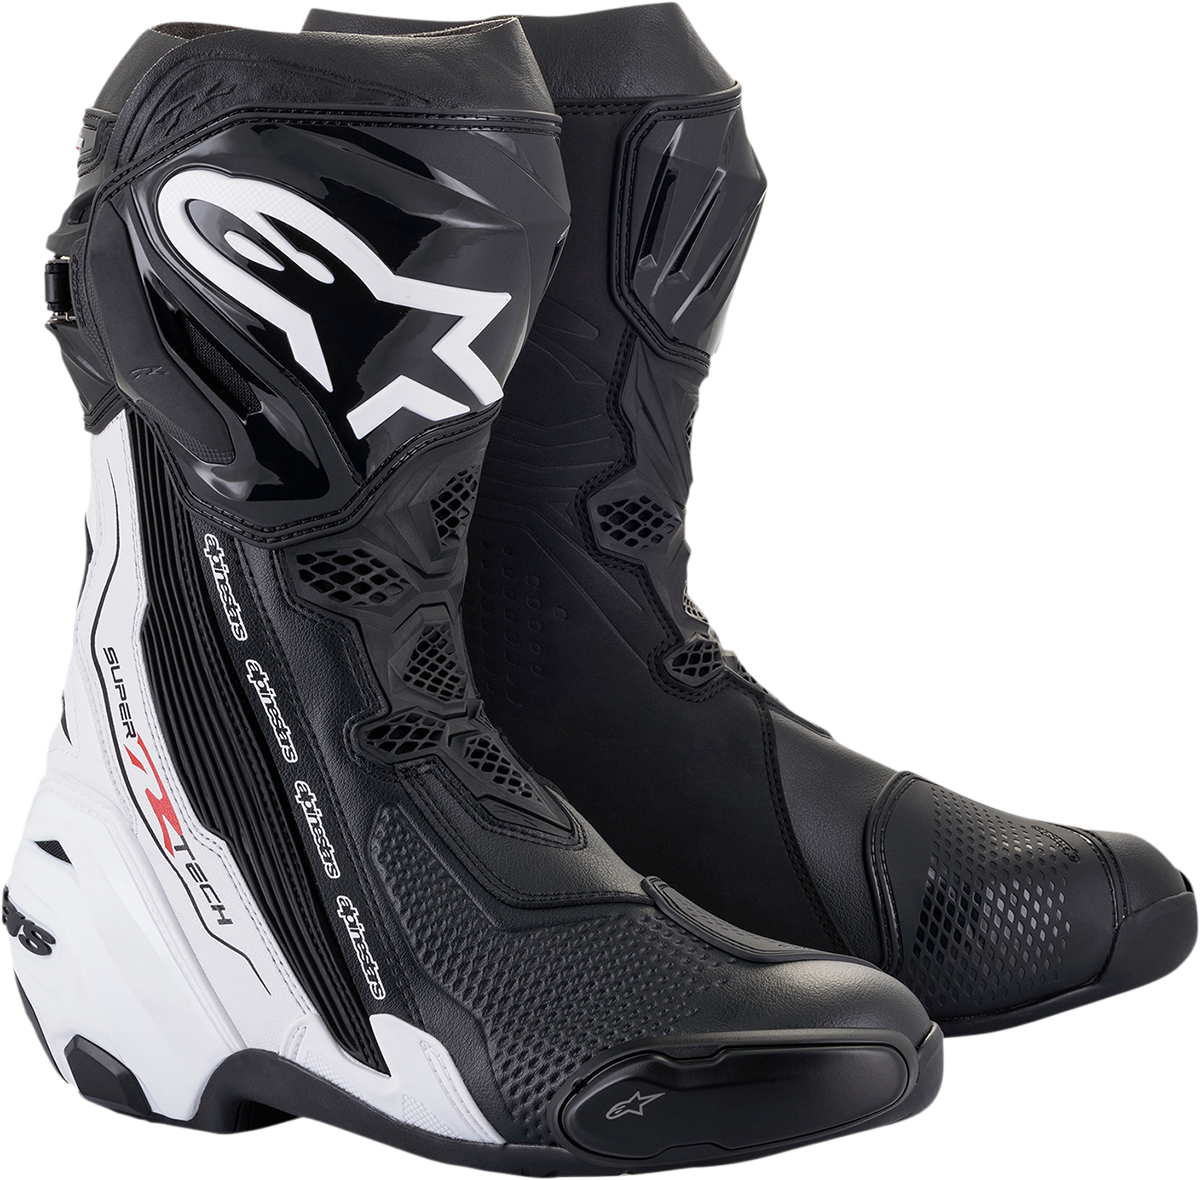 ALPINESTARS Supertech R Boots - Black/White - US 9 / EU 43 2220021-12-43